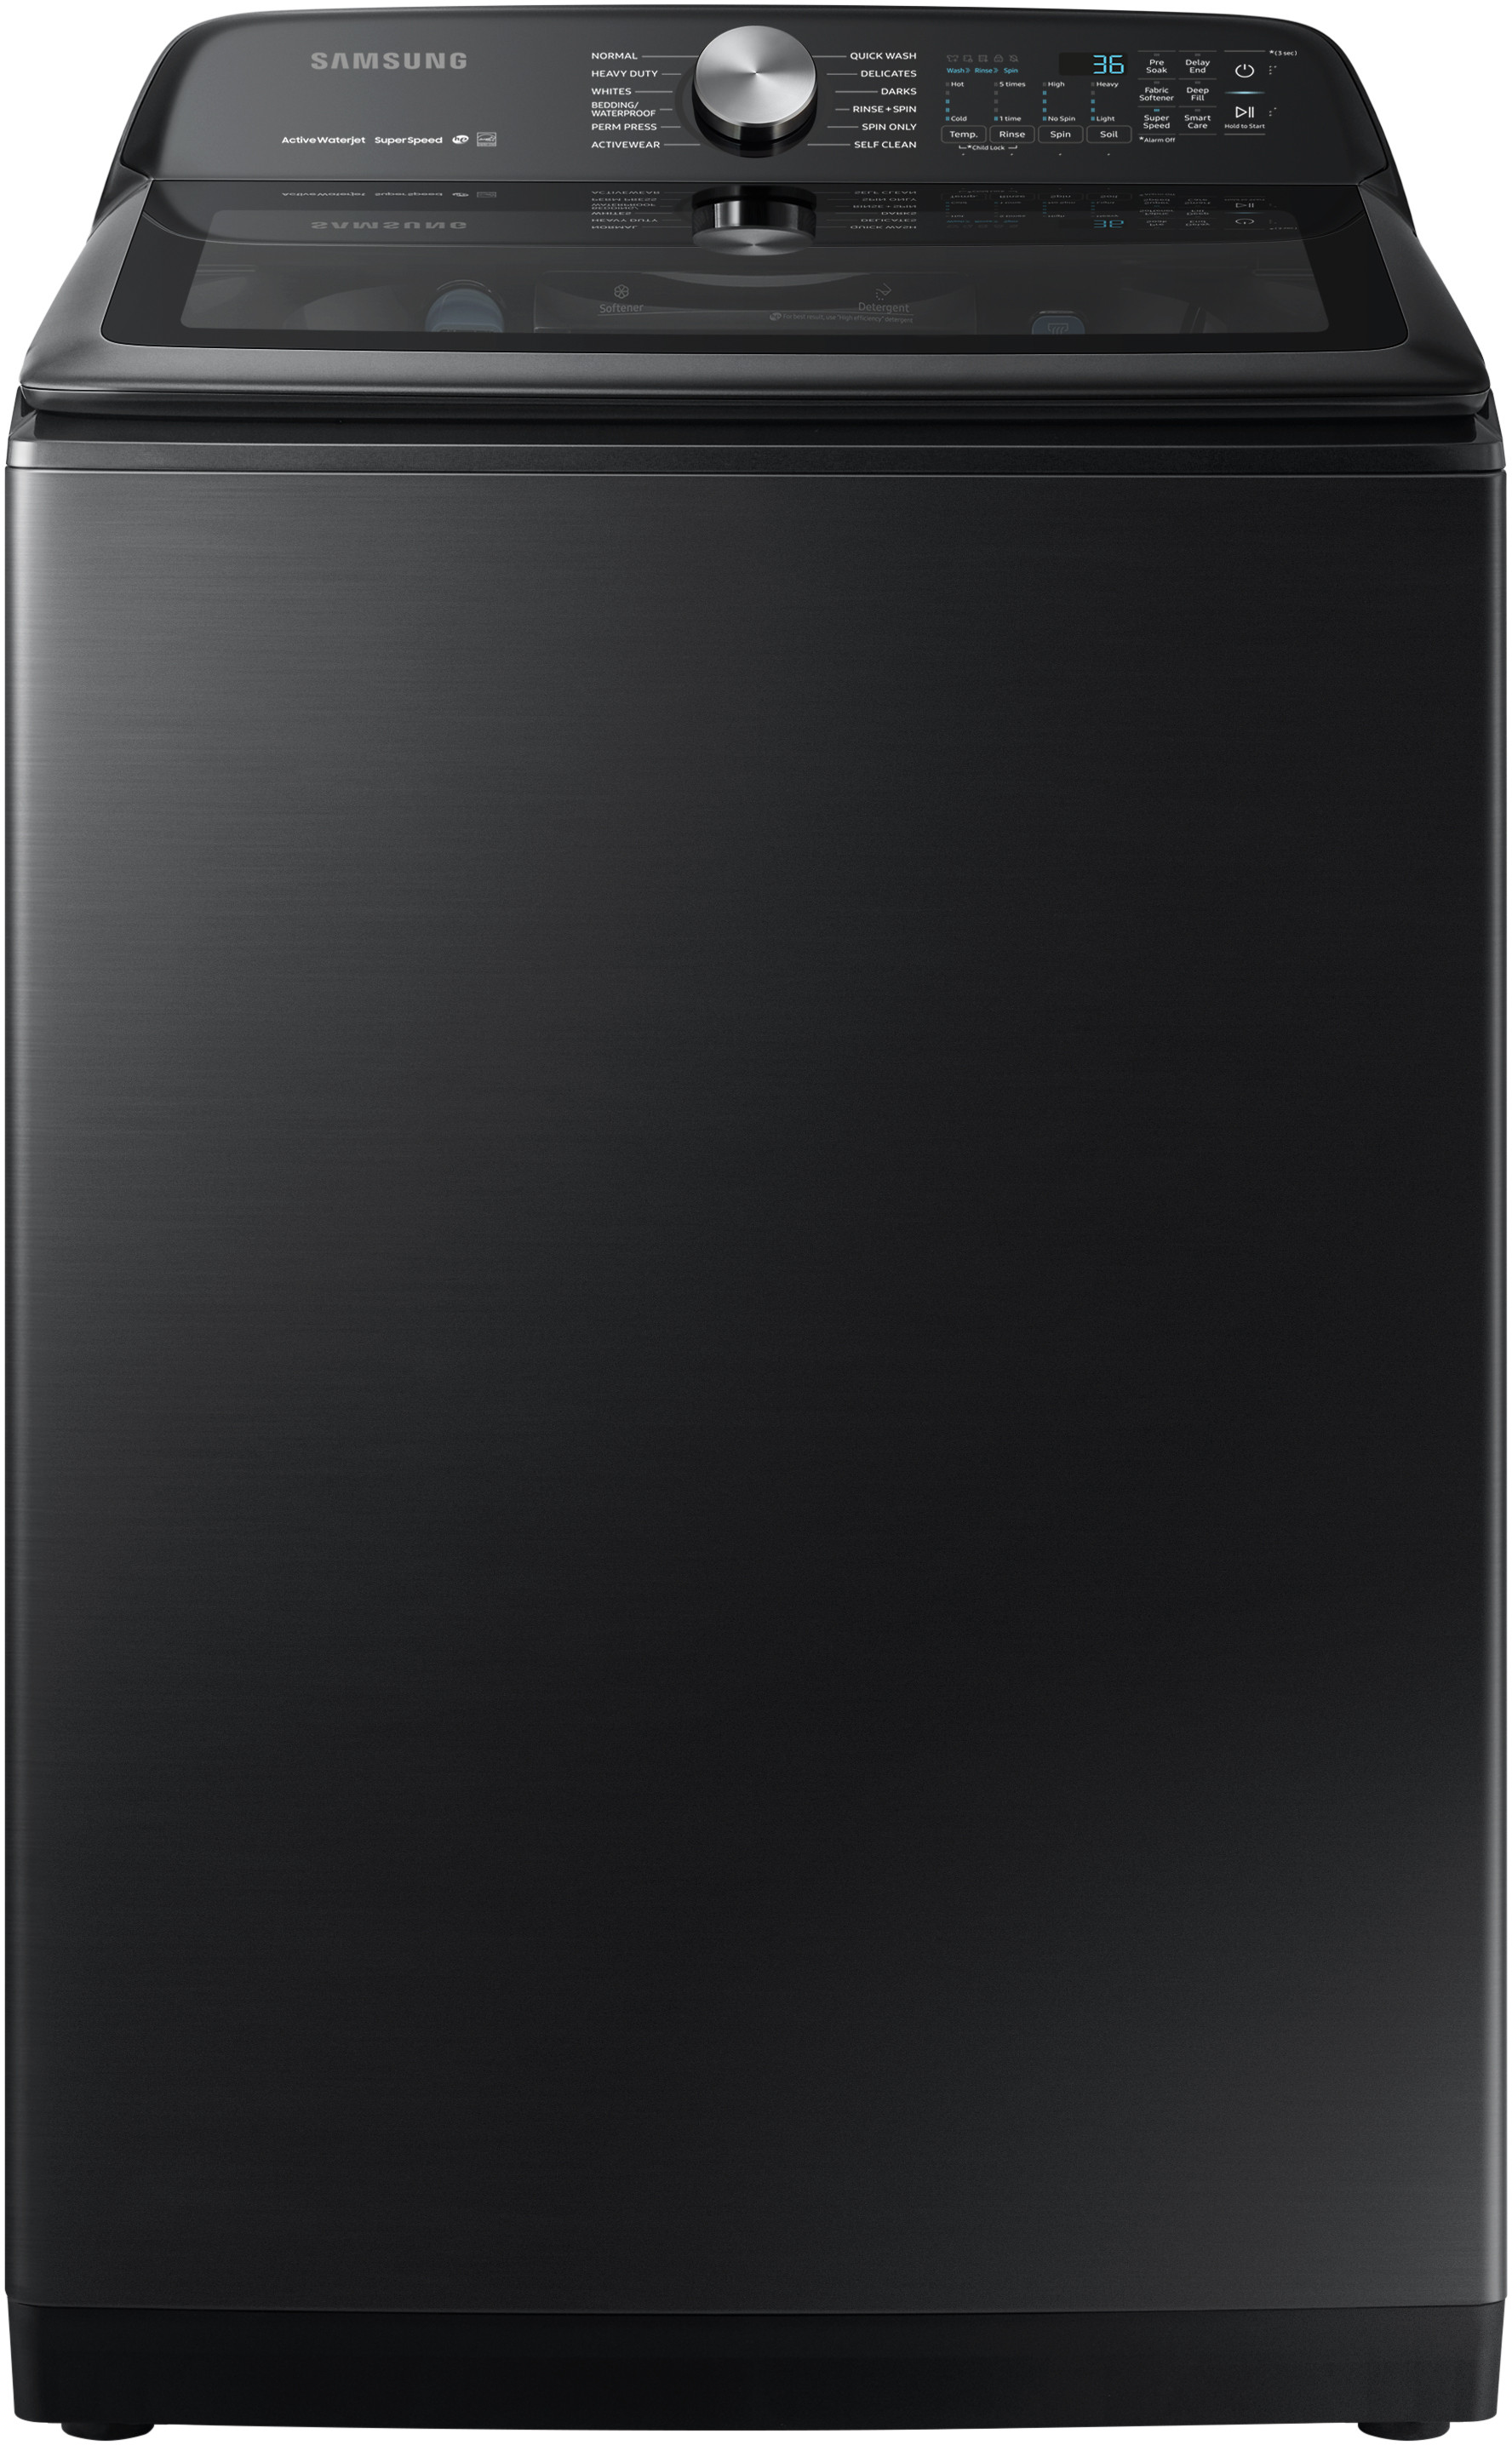 Product image of Samsung WA50R5400AV